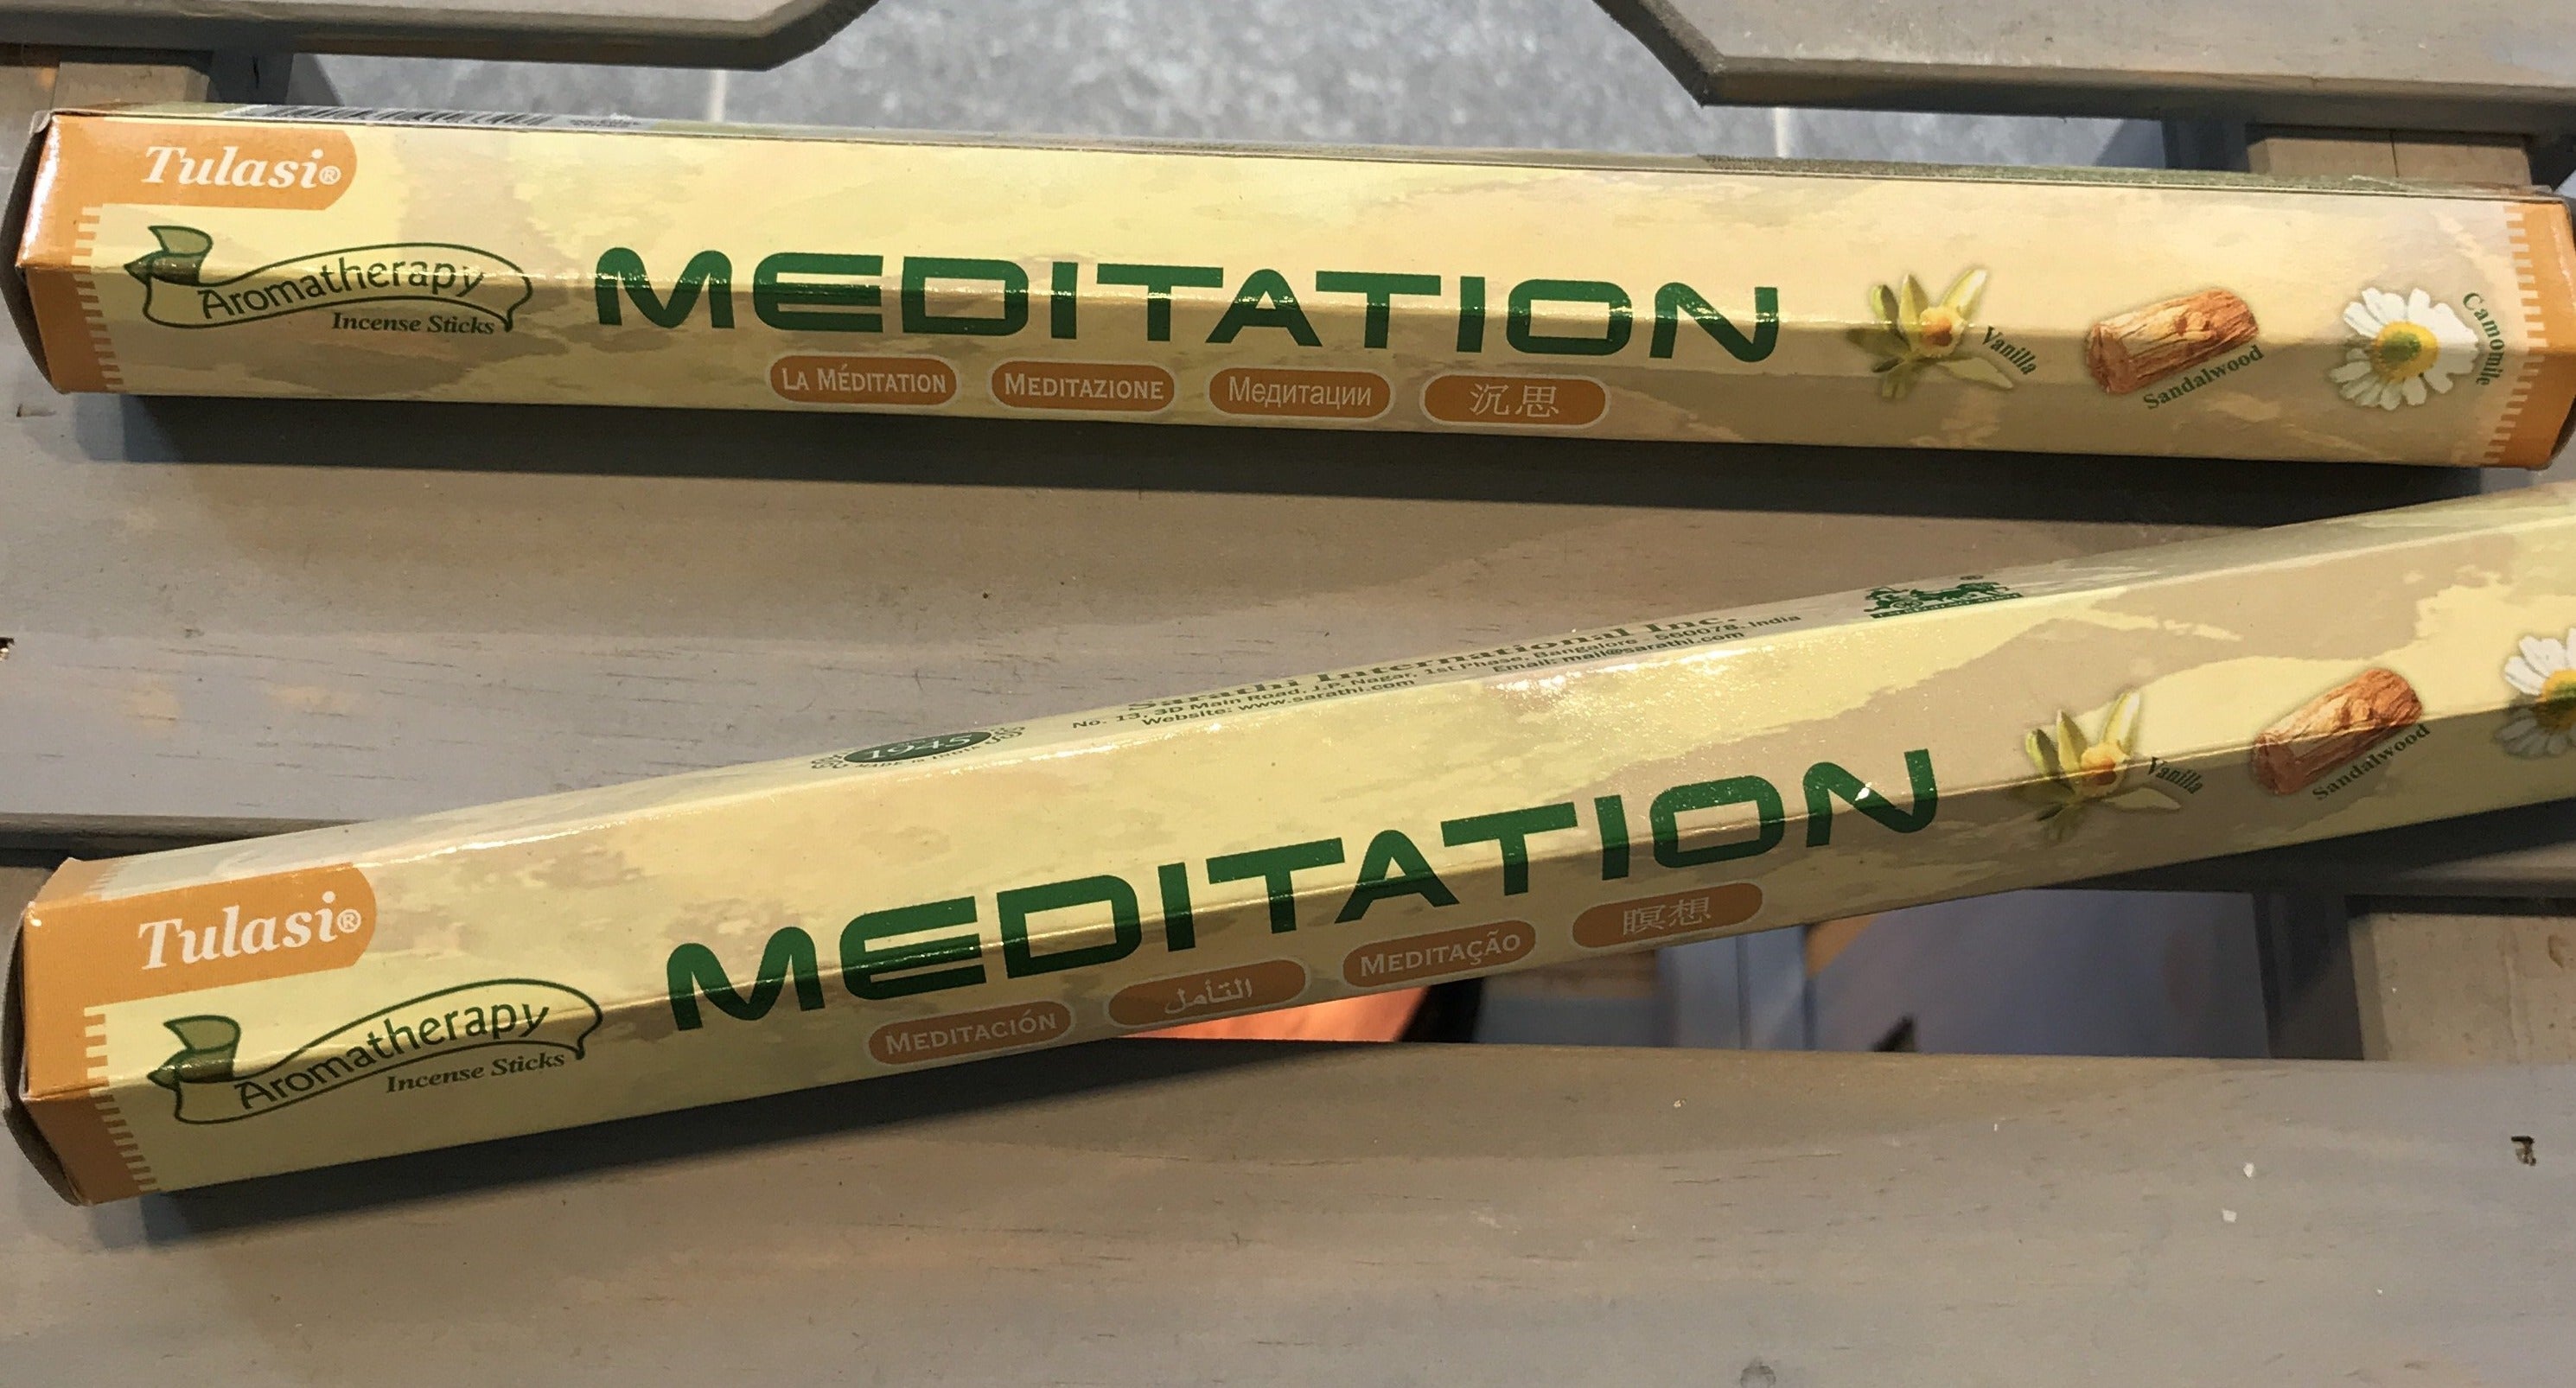 Tulasi Meditation (8 / 20 sticks)